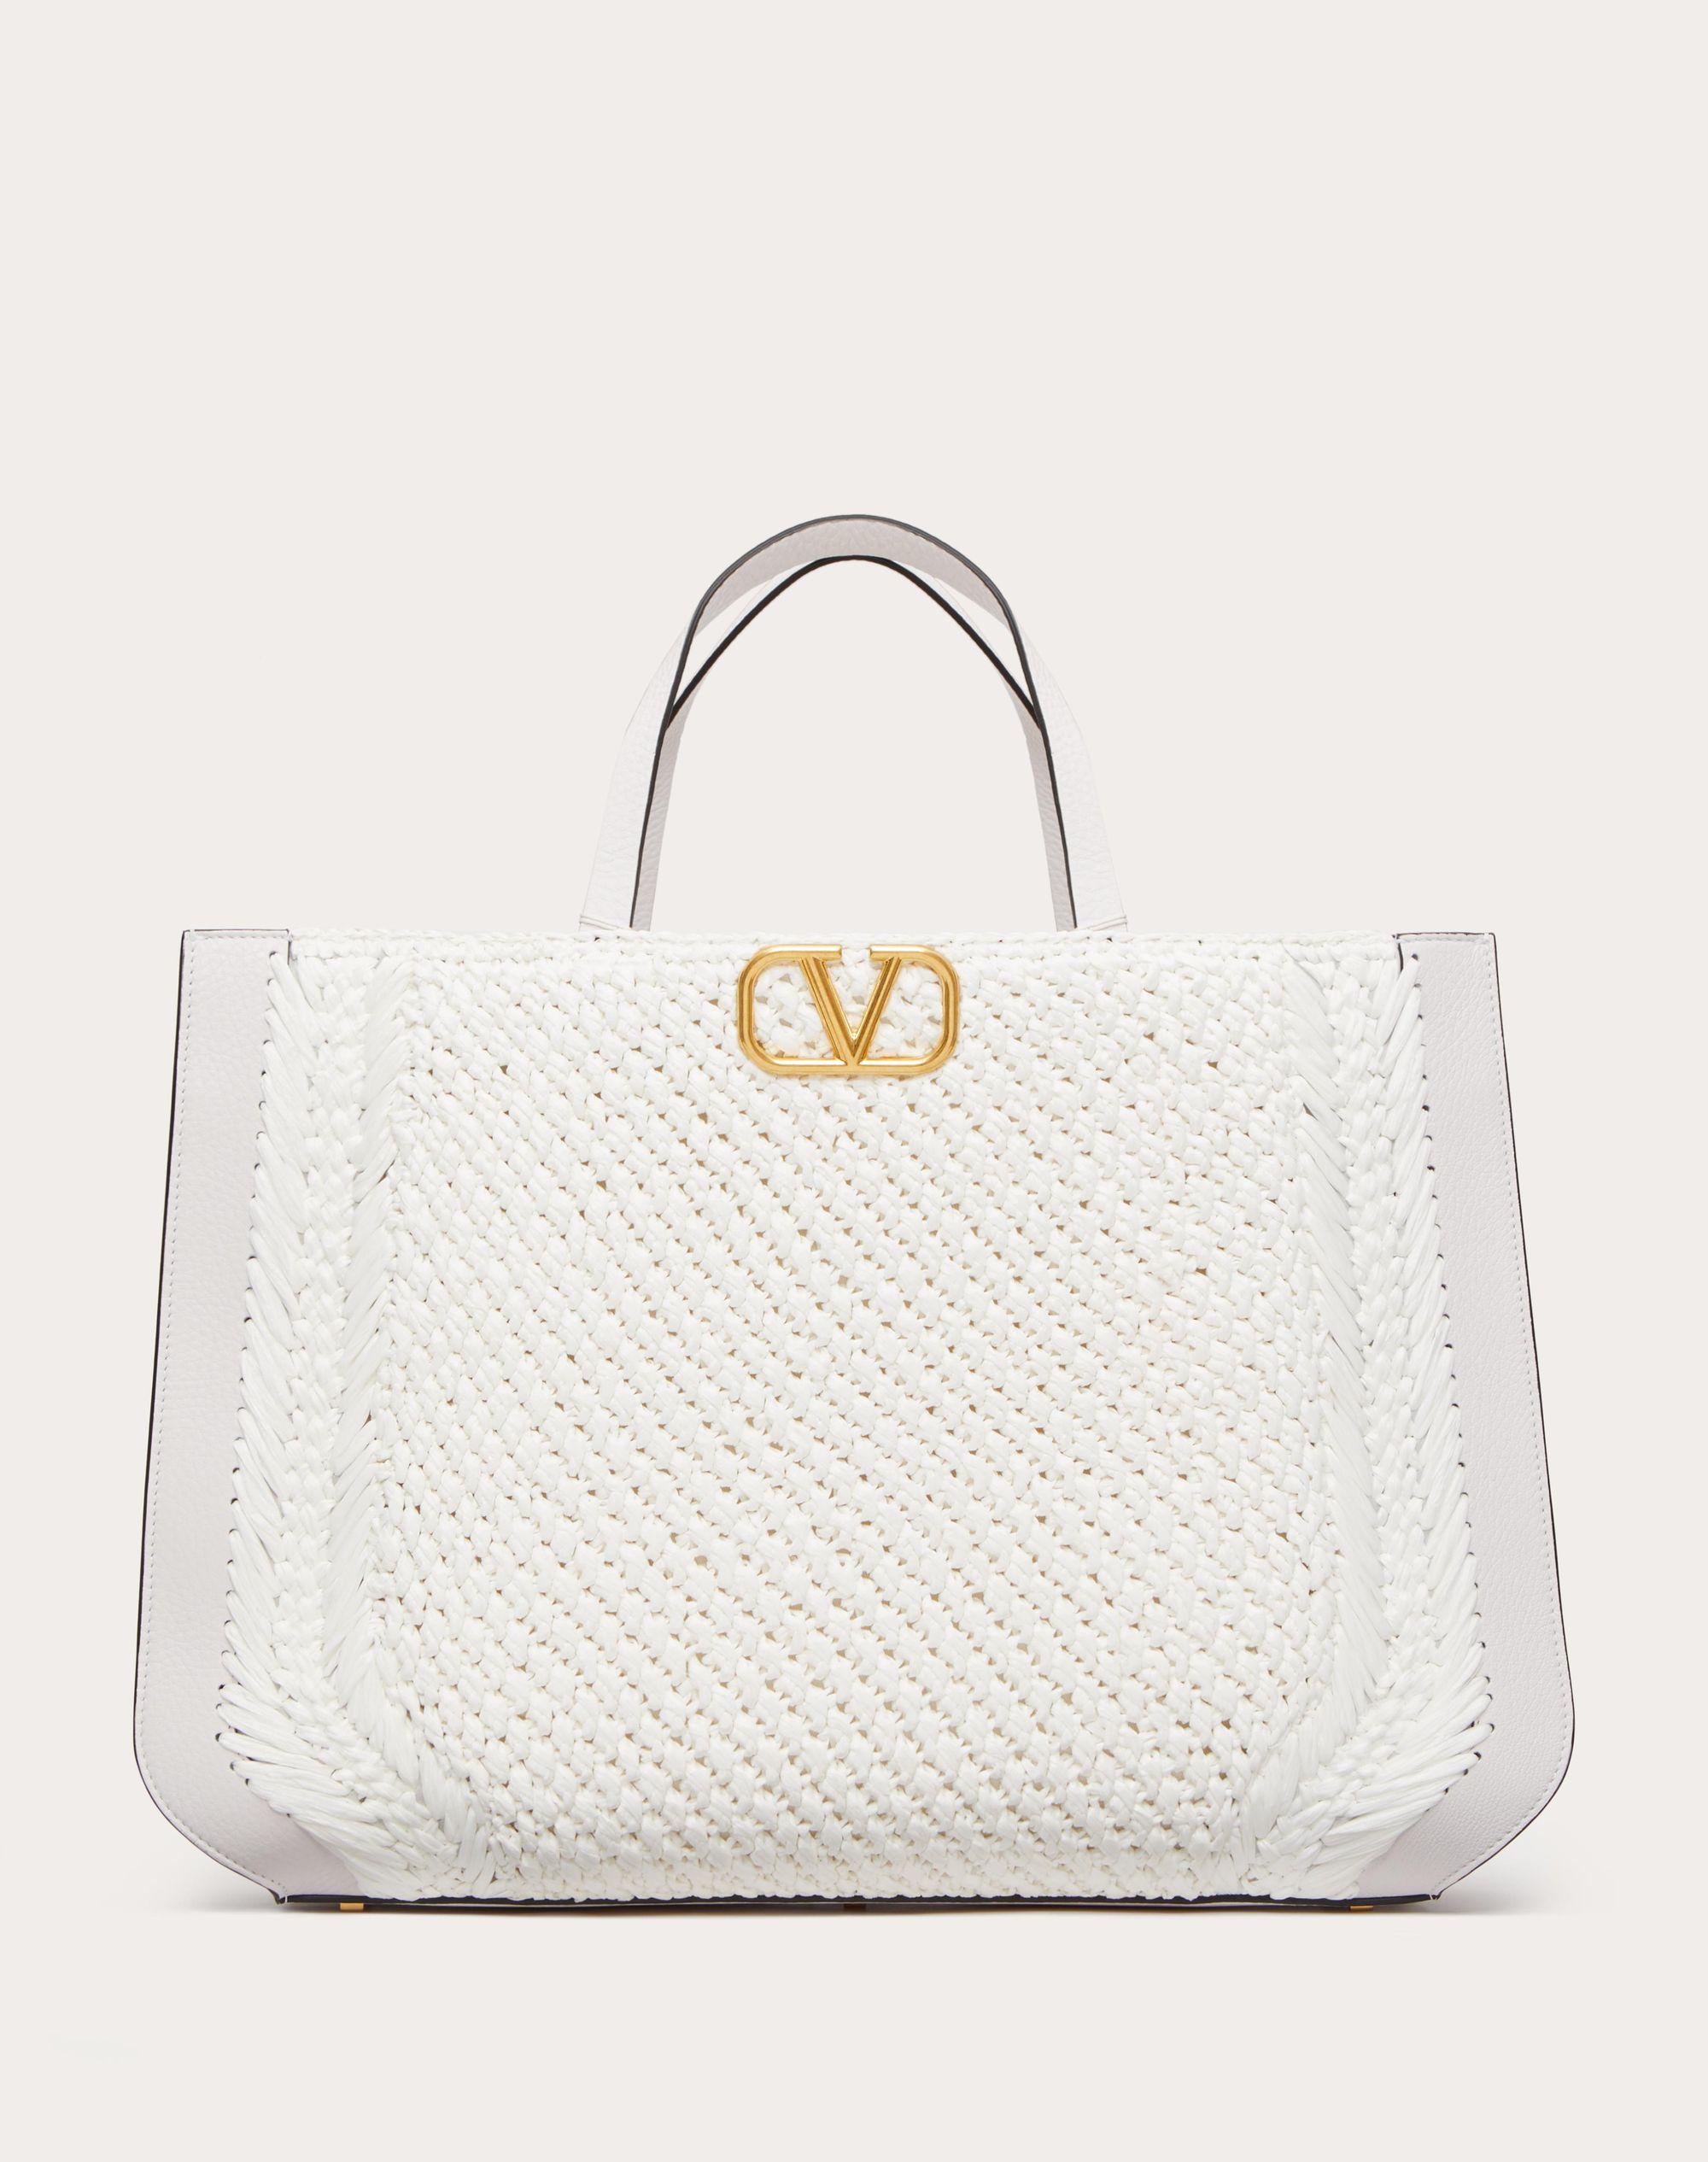 Valentino Garavani VLogo Signature Handbag with Raffia Embroidery Woman Natural/Saddle Brown Onesize